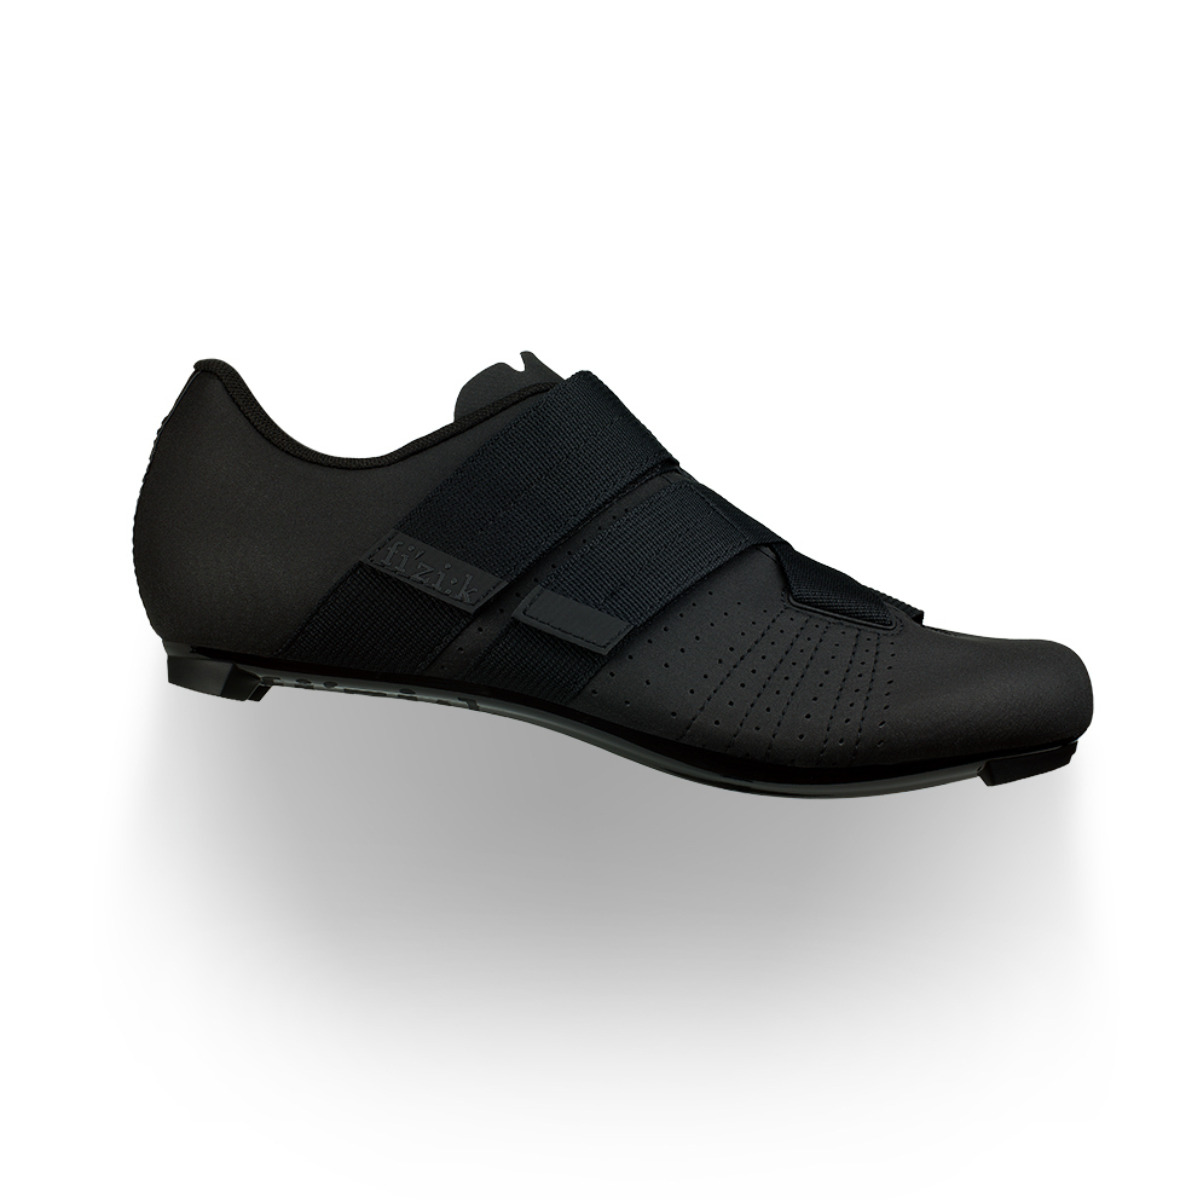 Chaussures Fizik Tempo Powerstrap R5